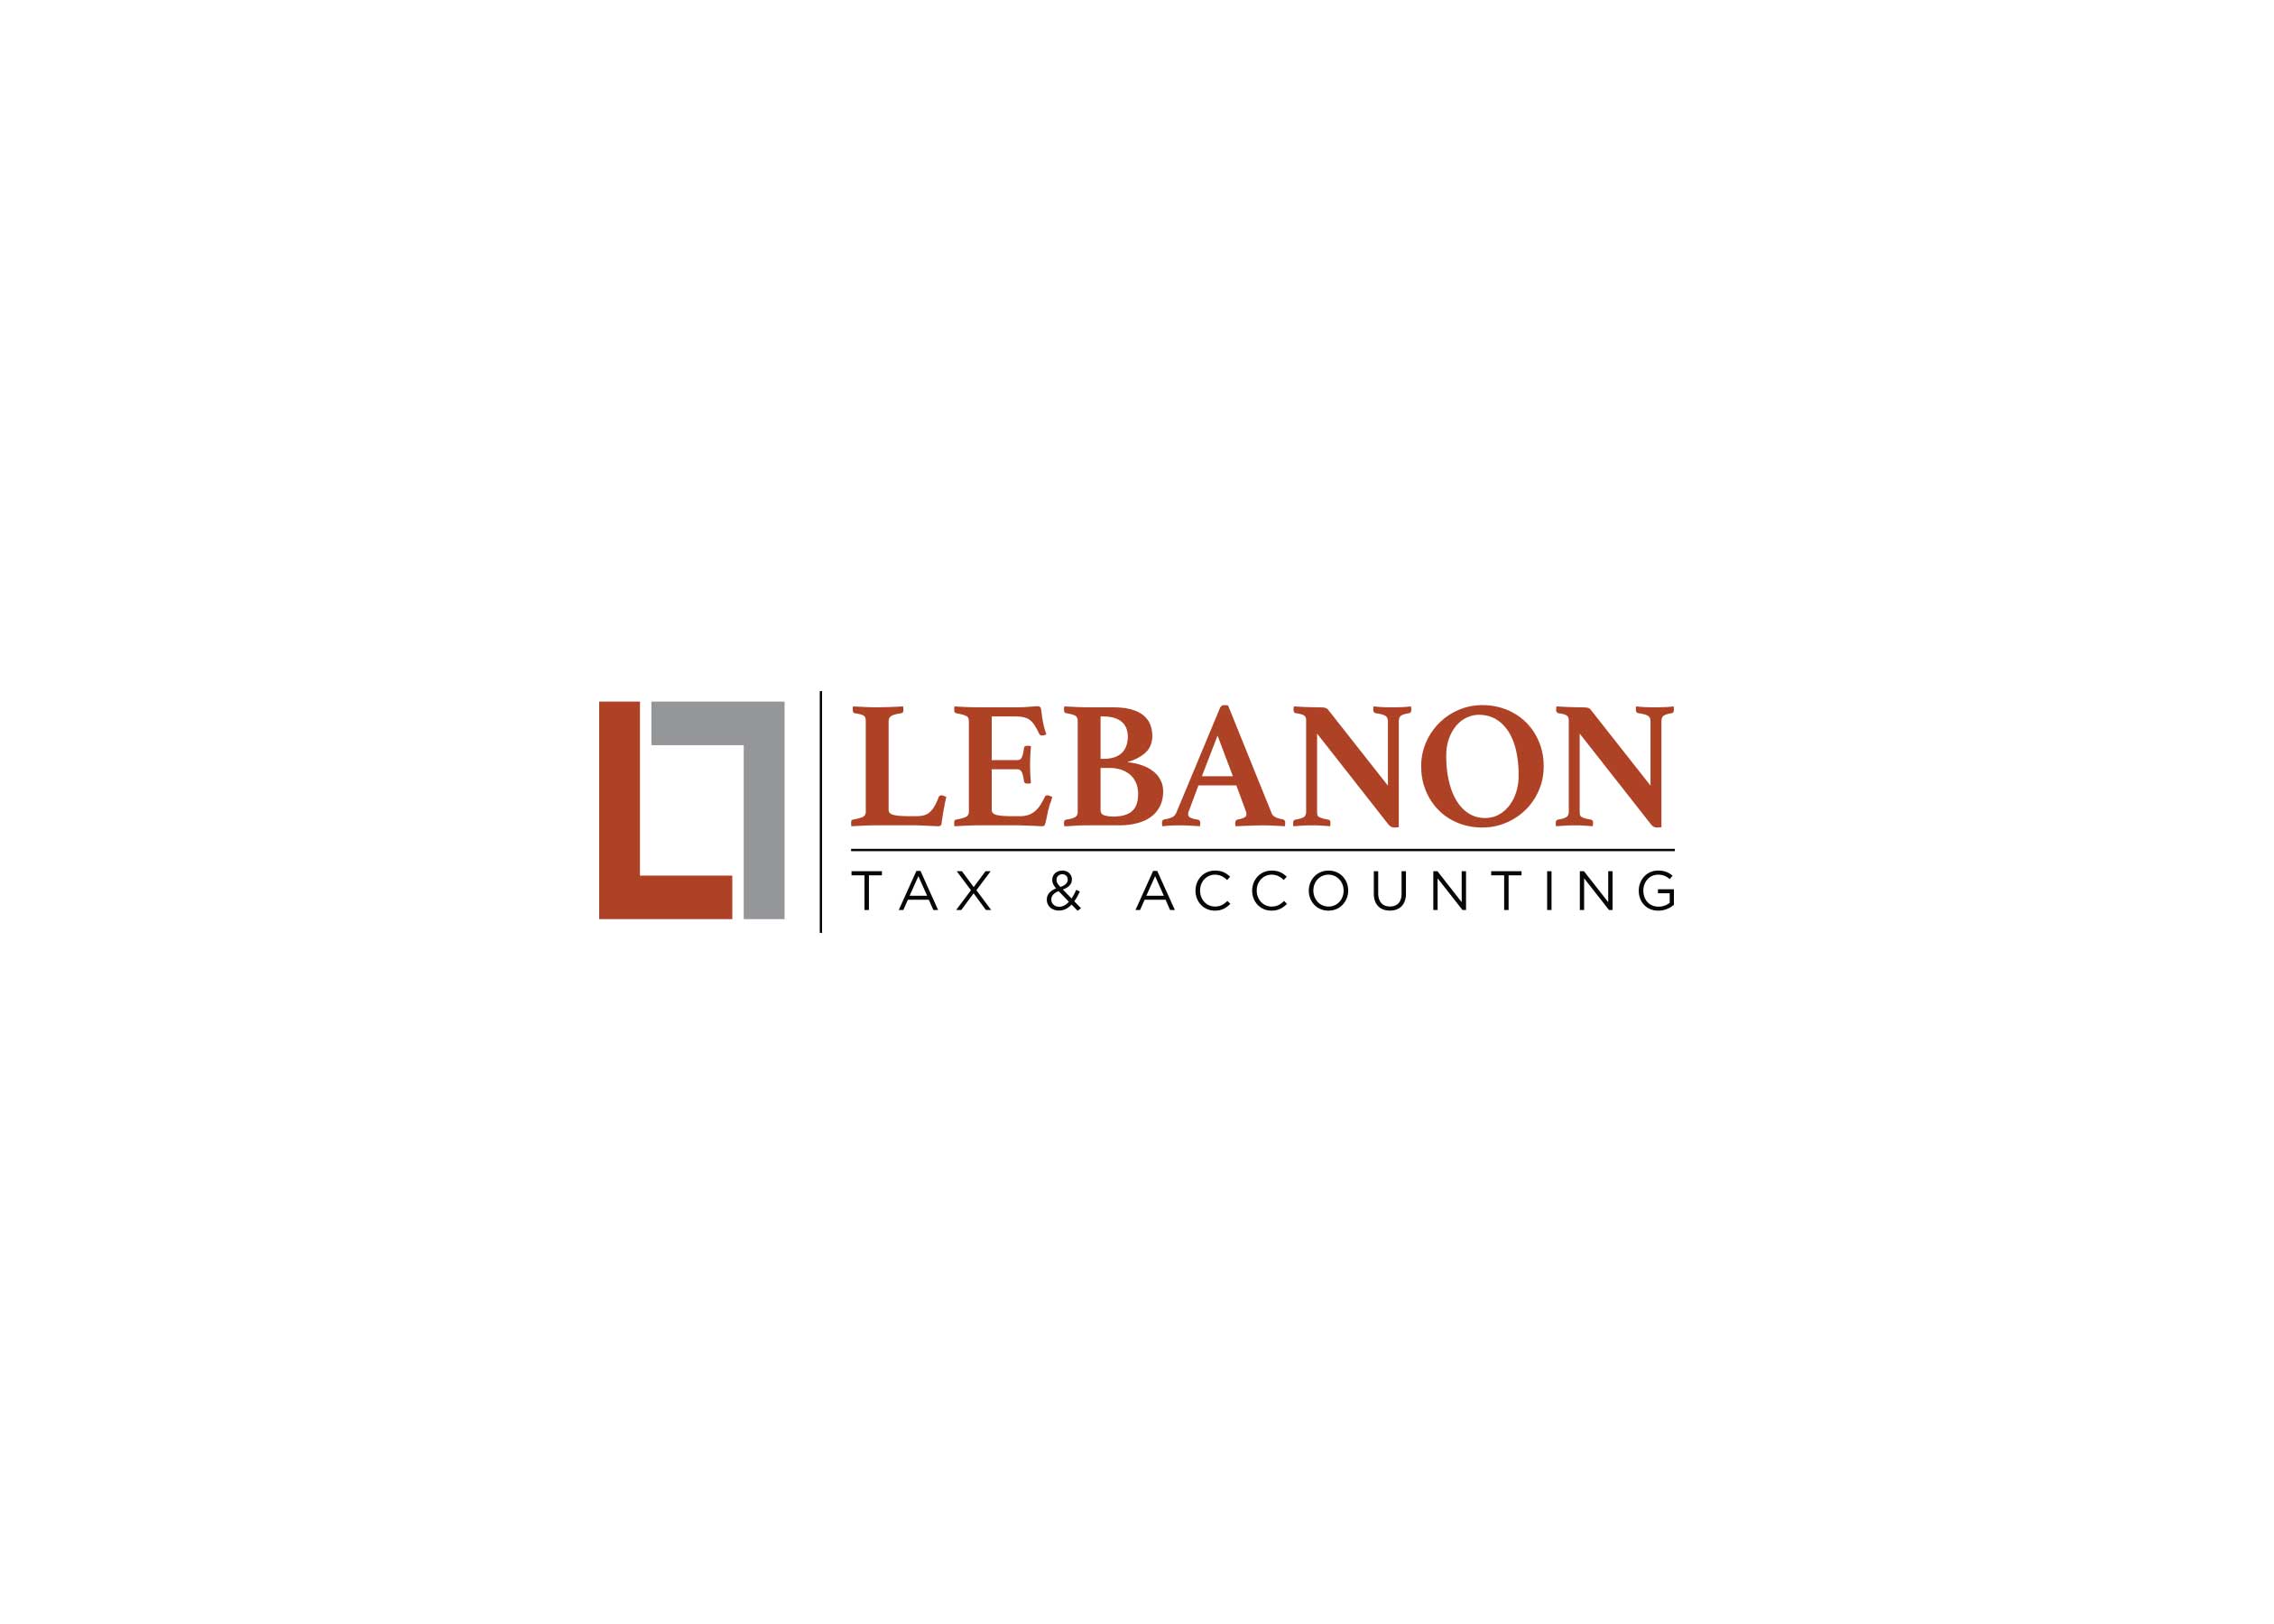 Logo Design for Lebanon Tax & Accounting